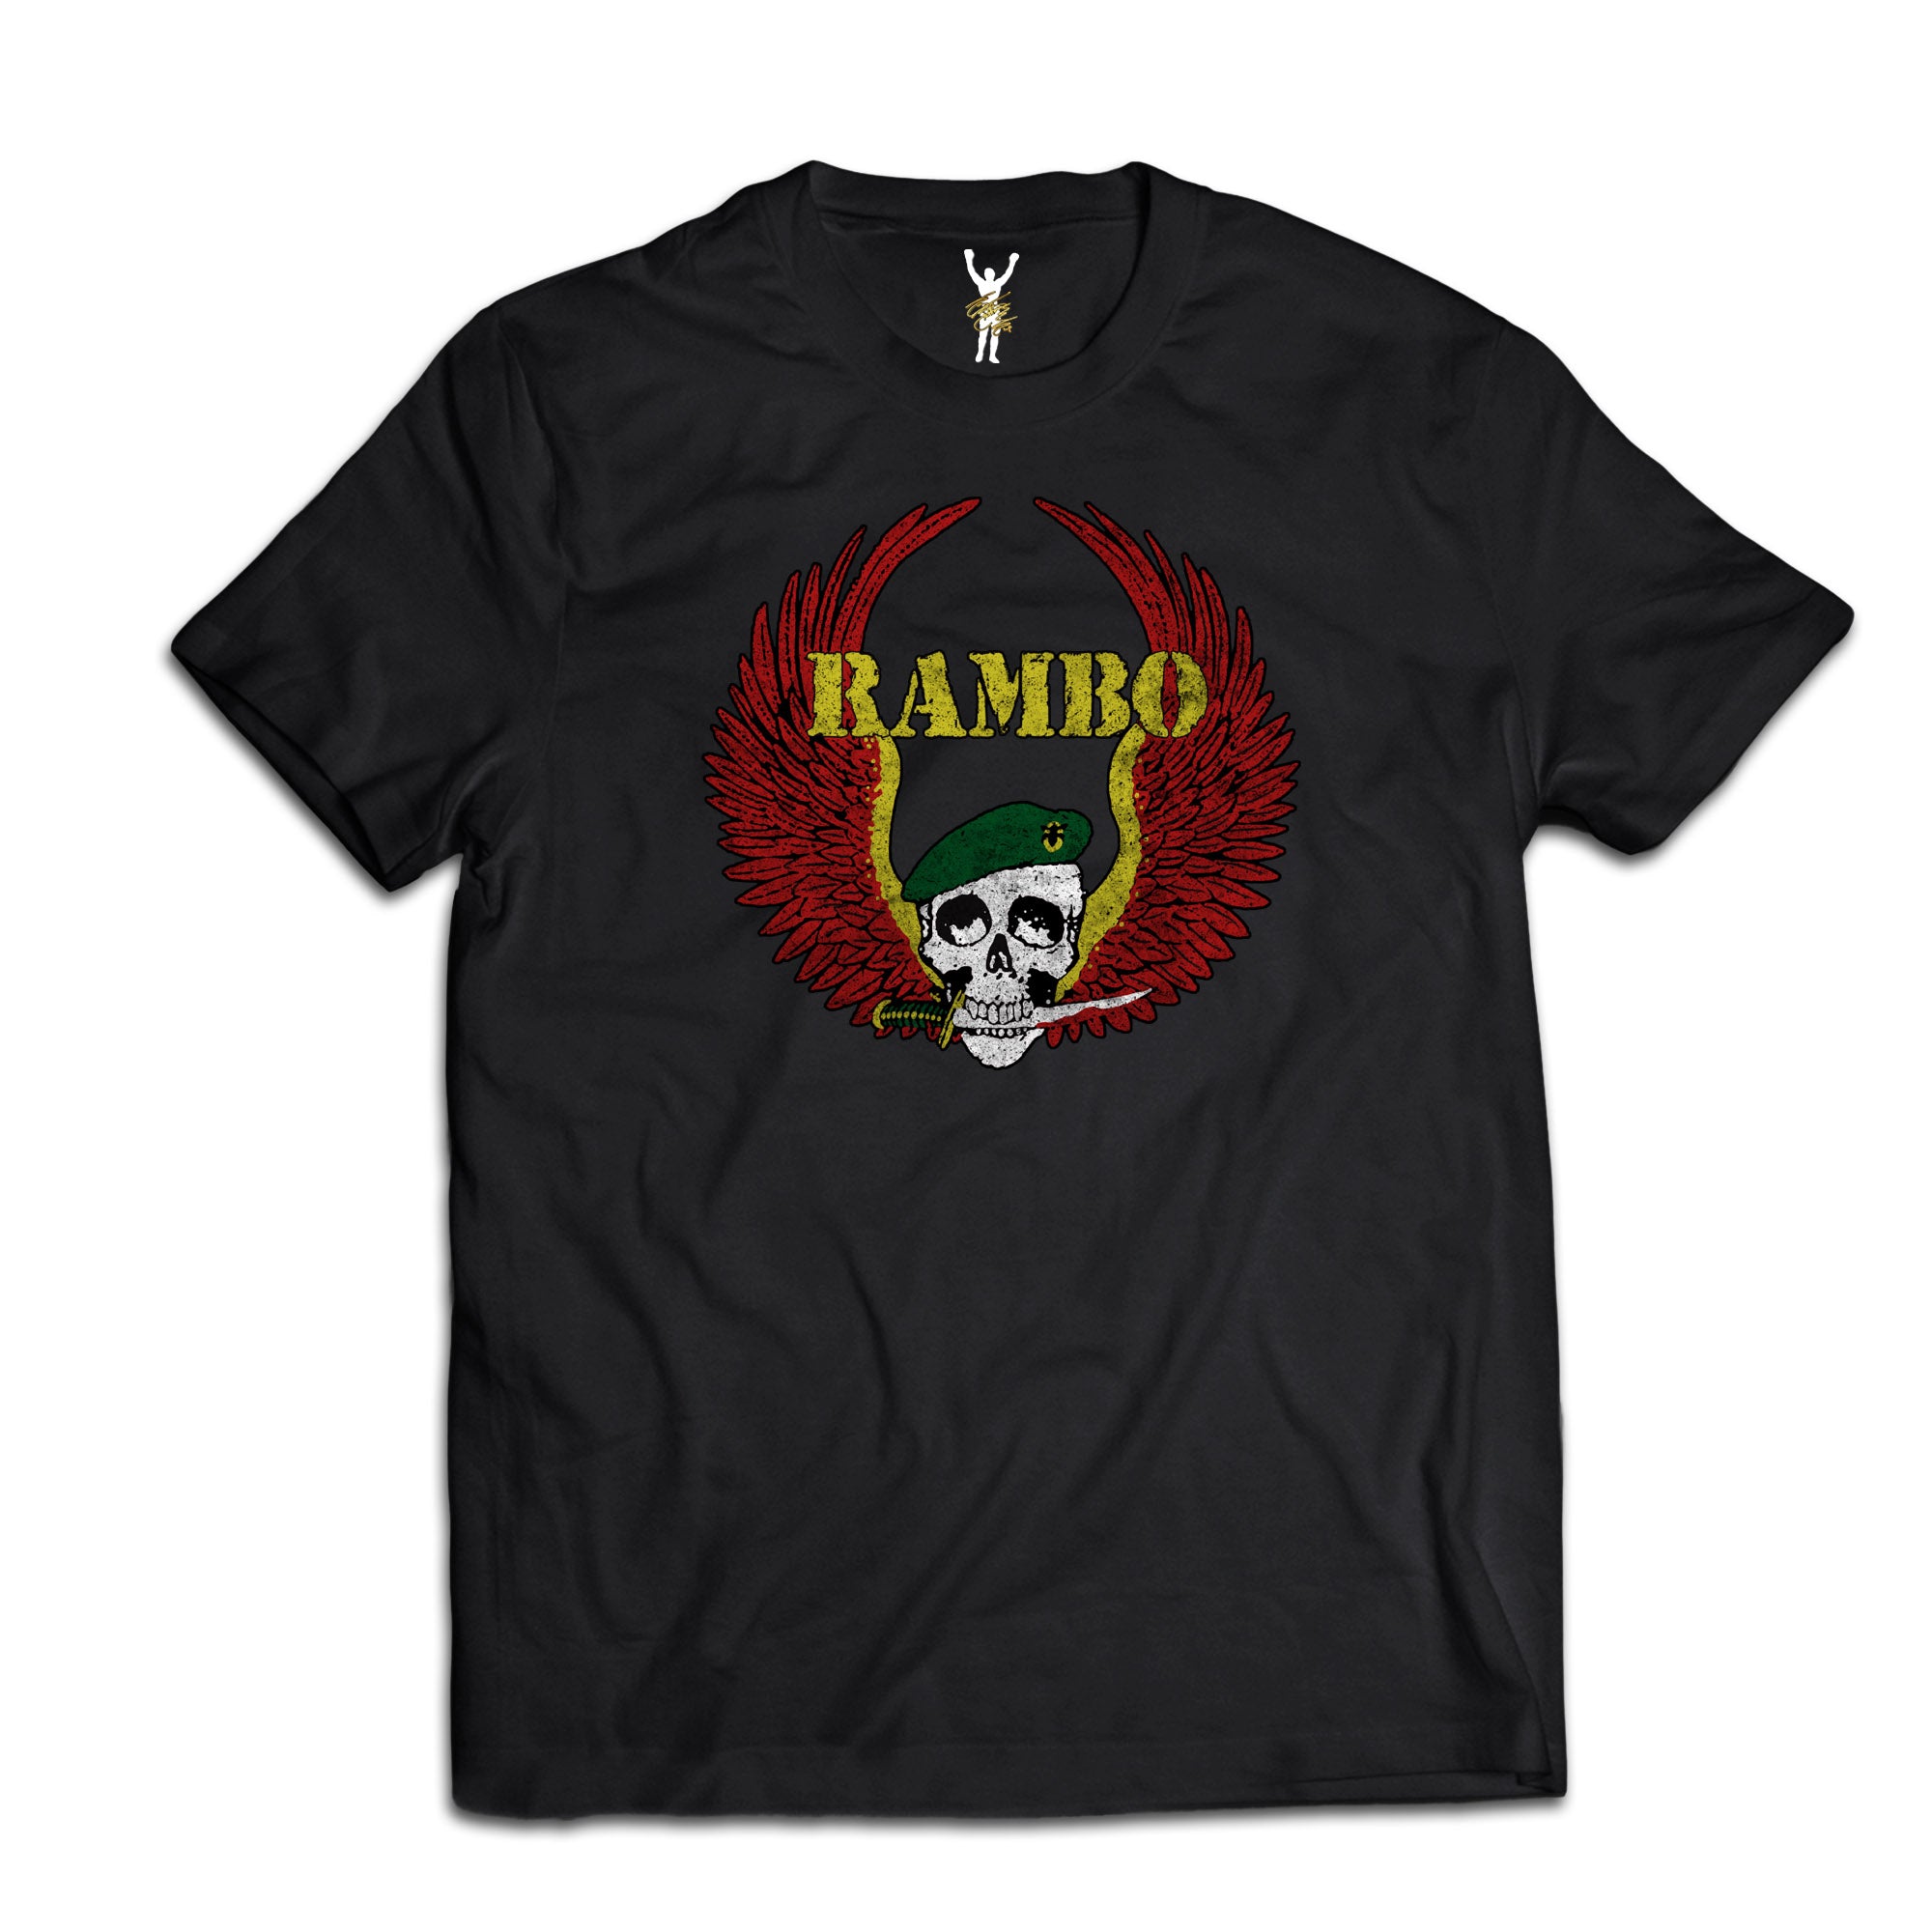 Rambo Cast & Crew Black Tee